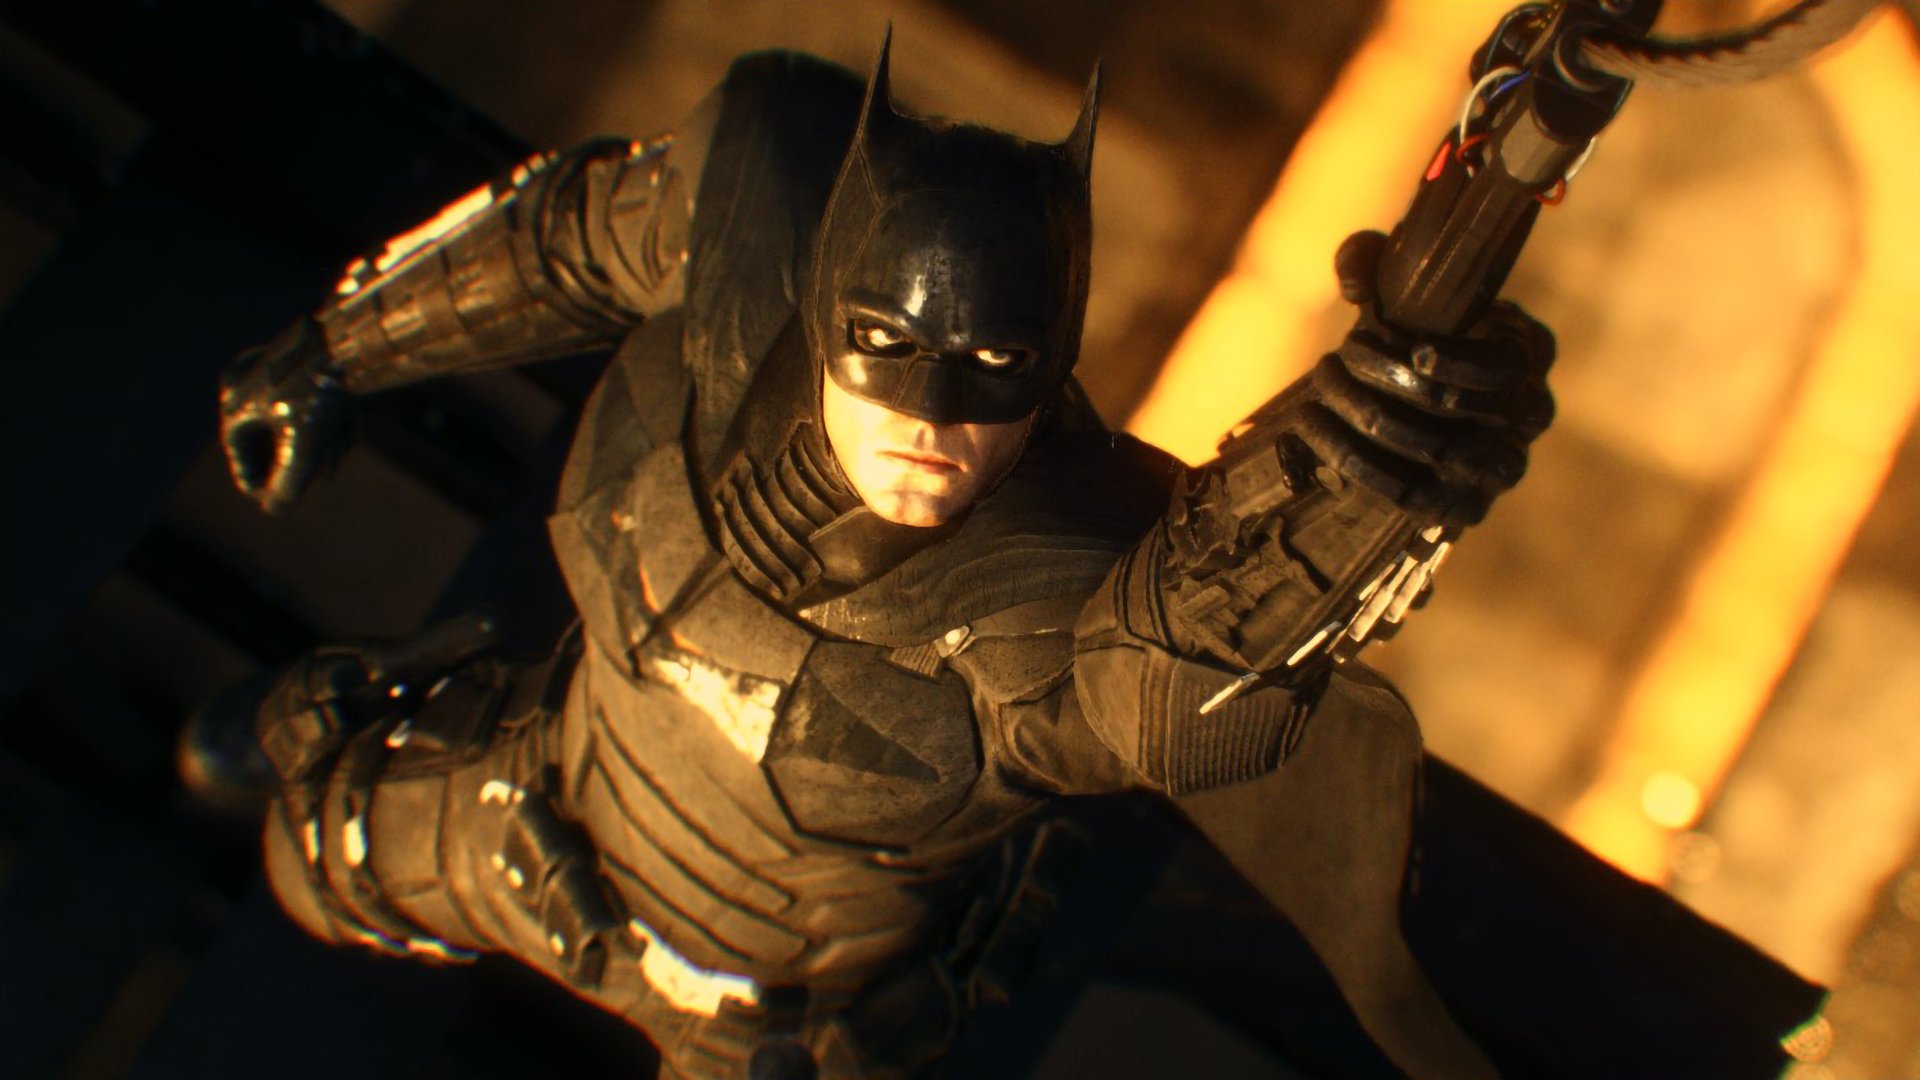 Batman: Arkham Trilogy on Switch gets official launch trailer